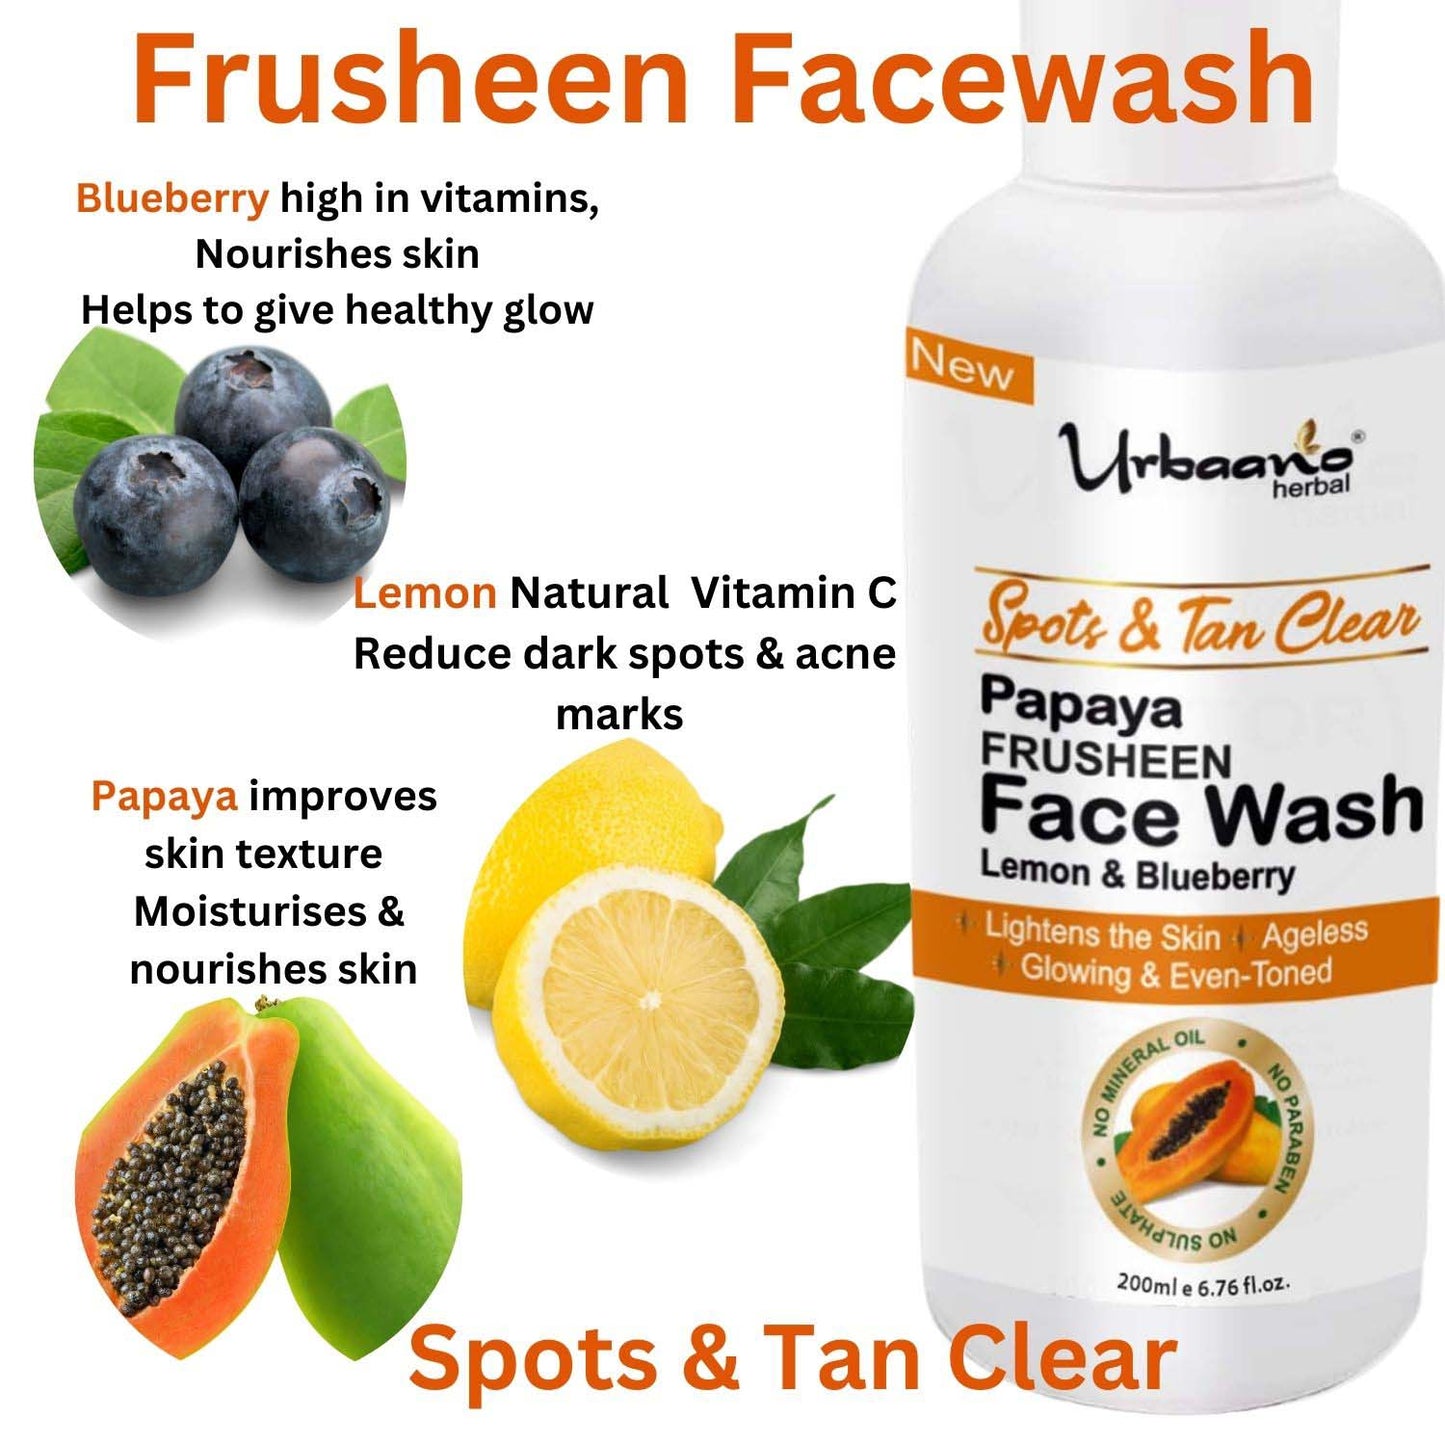 urbaano herbal frusheen papaya spots & tan clear face wash skincare combo for lightening skin has blueberry, papaya, lemon